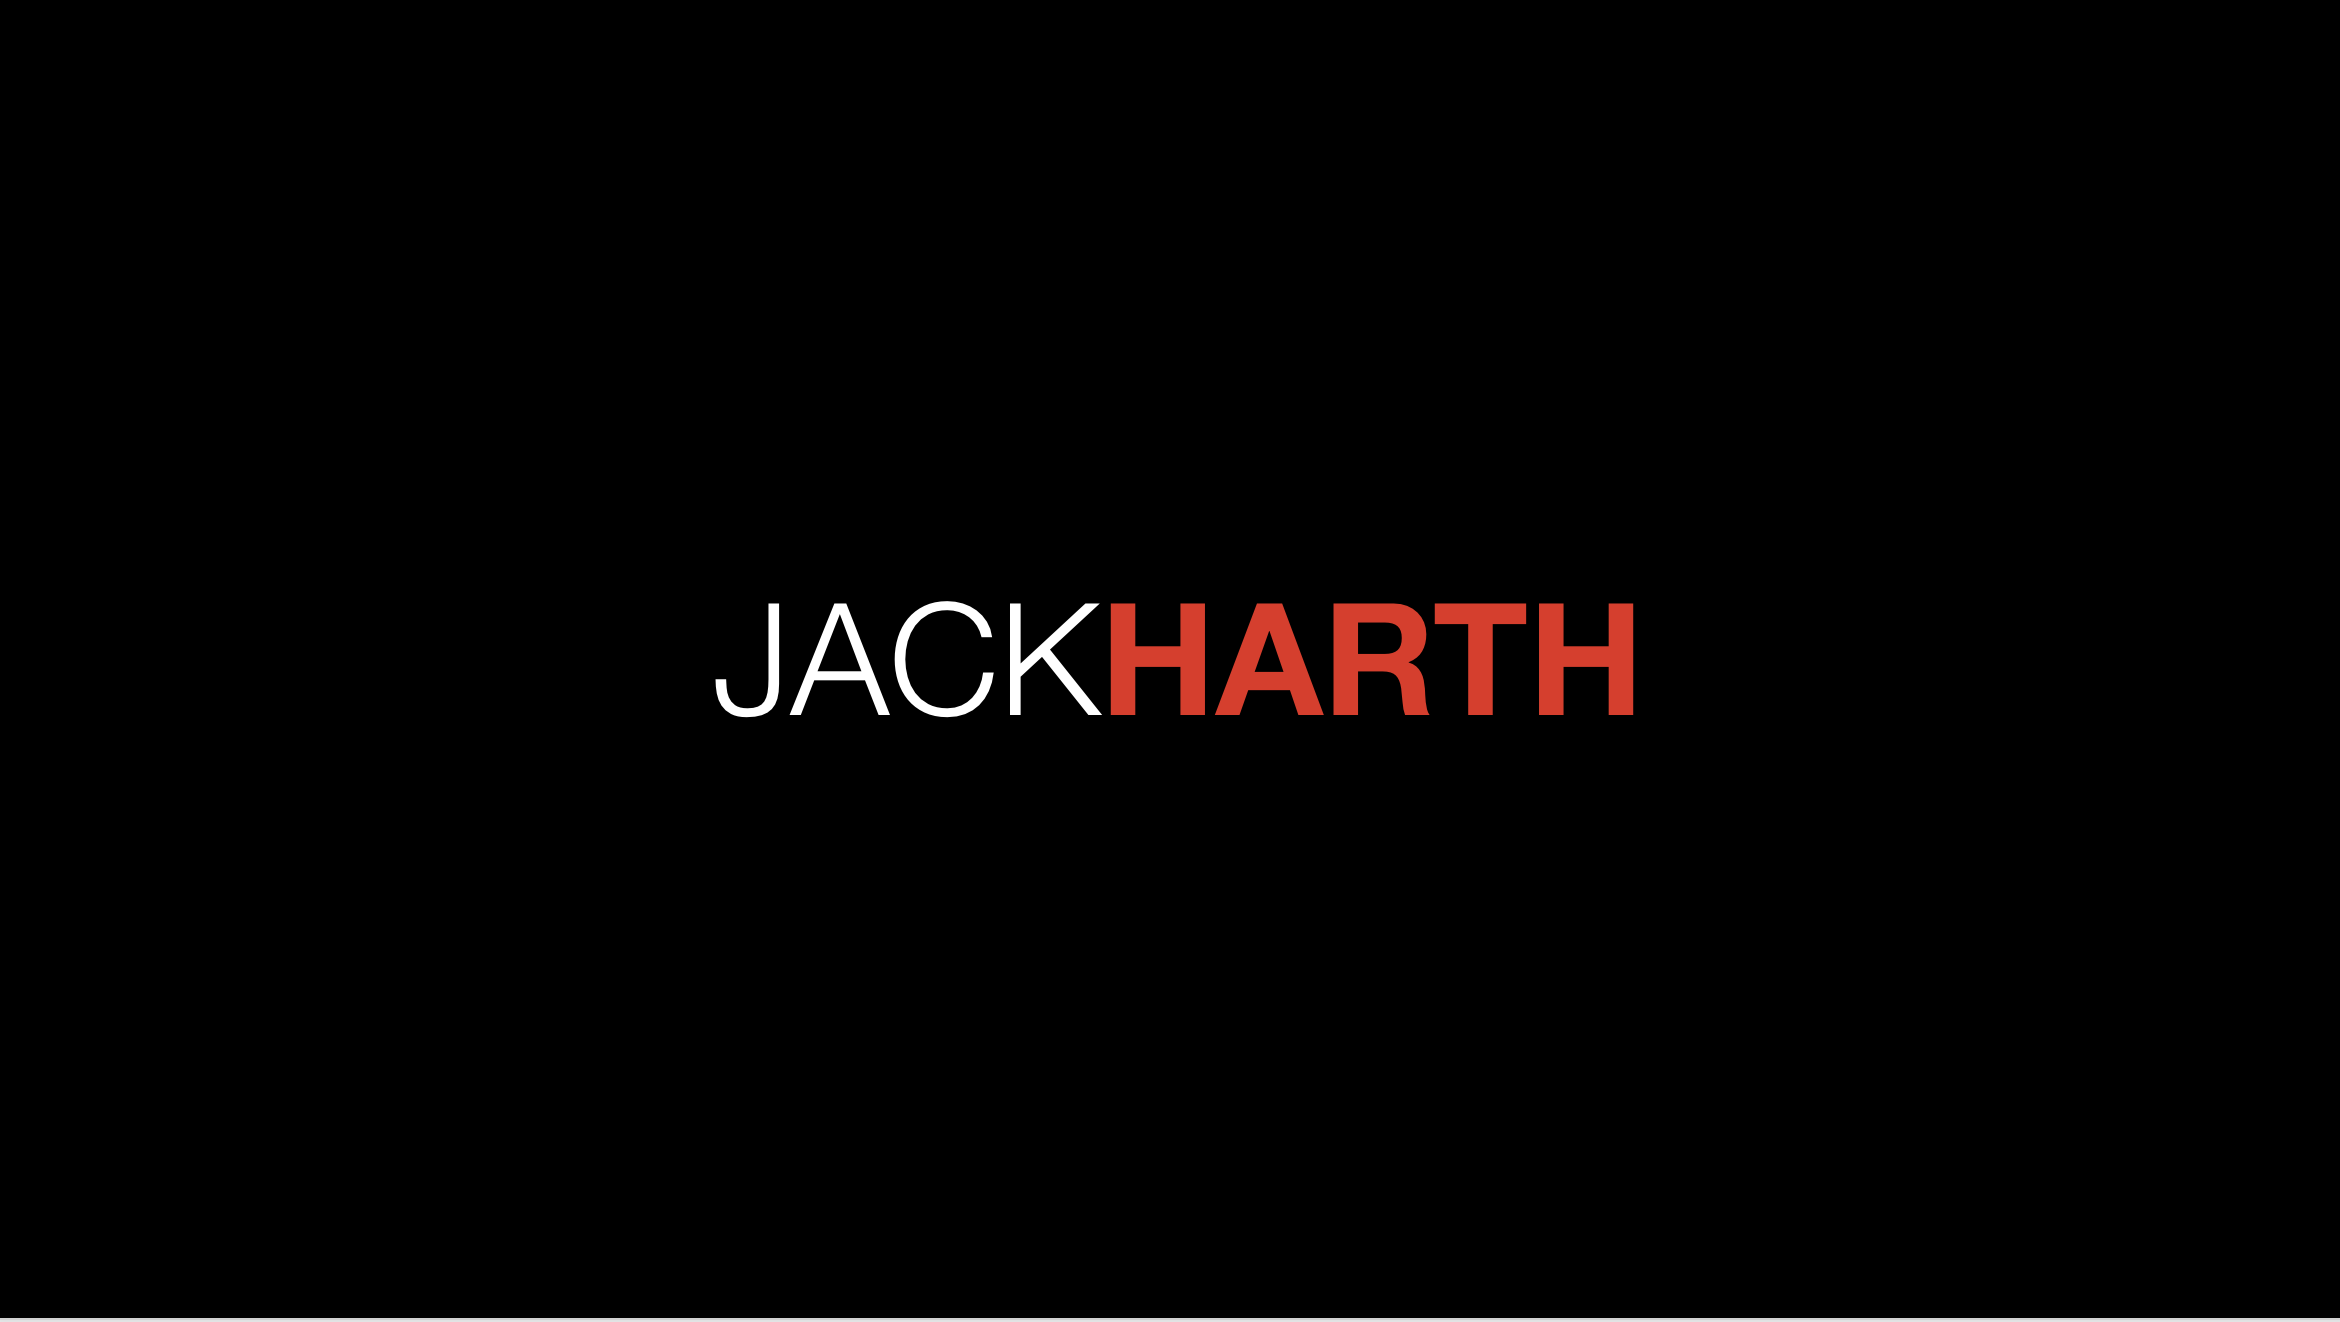 Jack Harth name slide